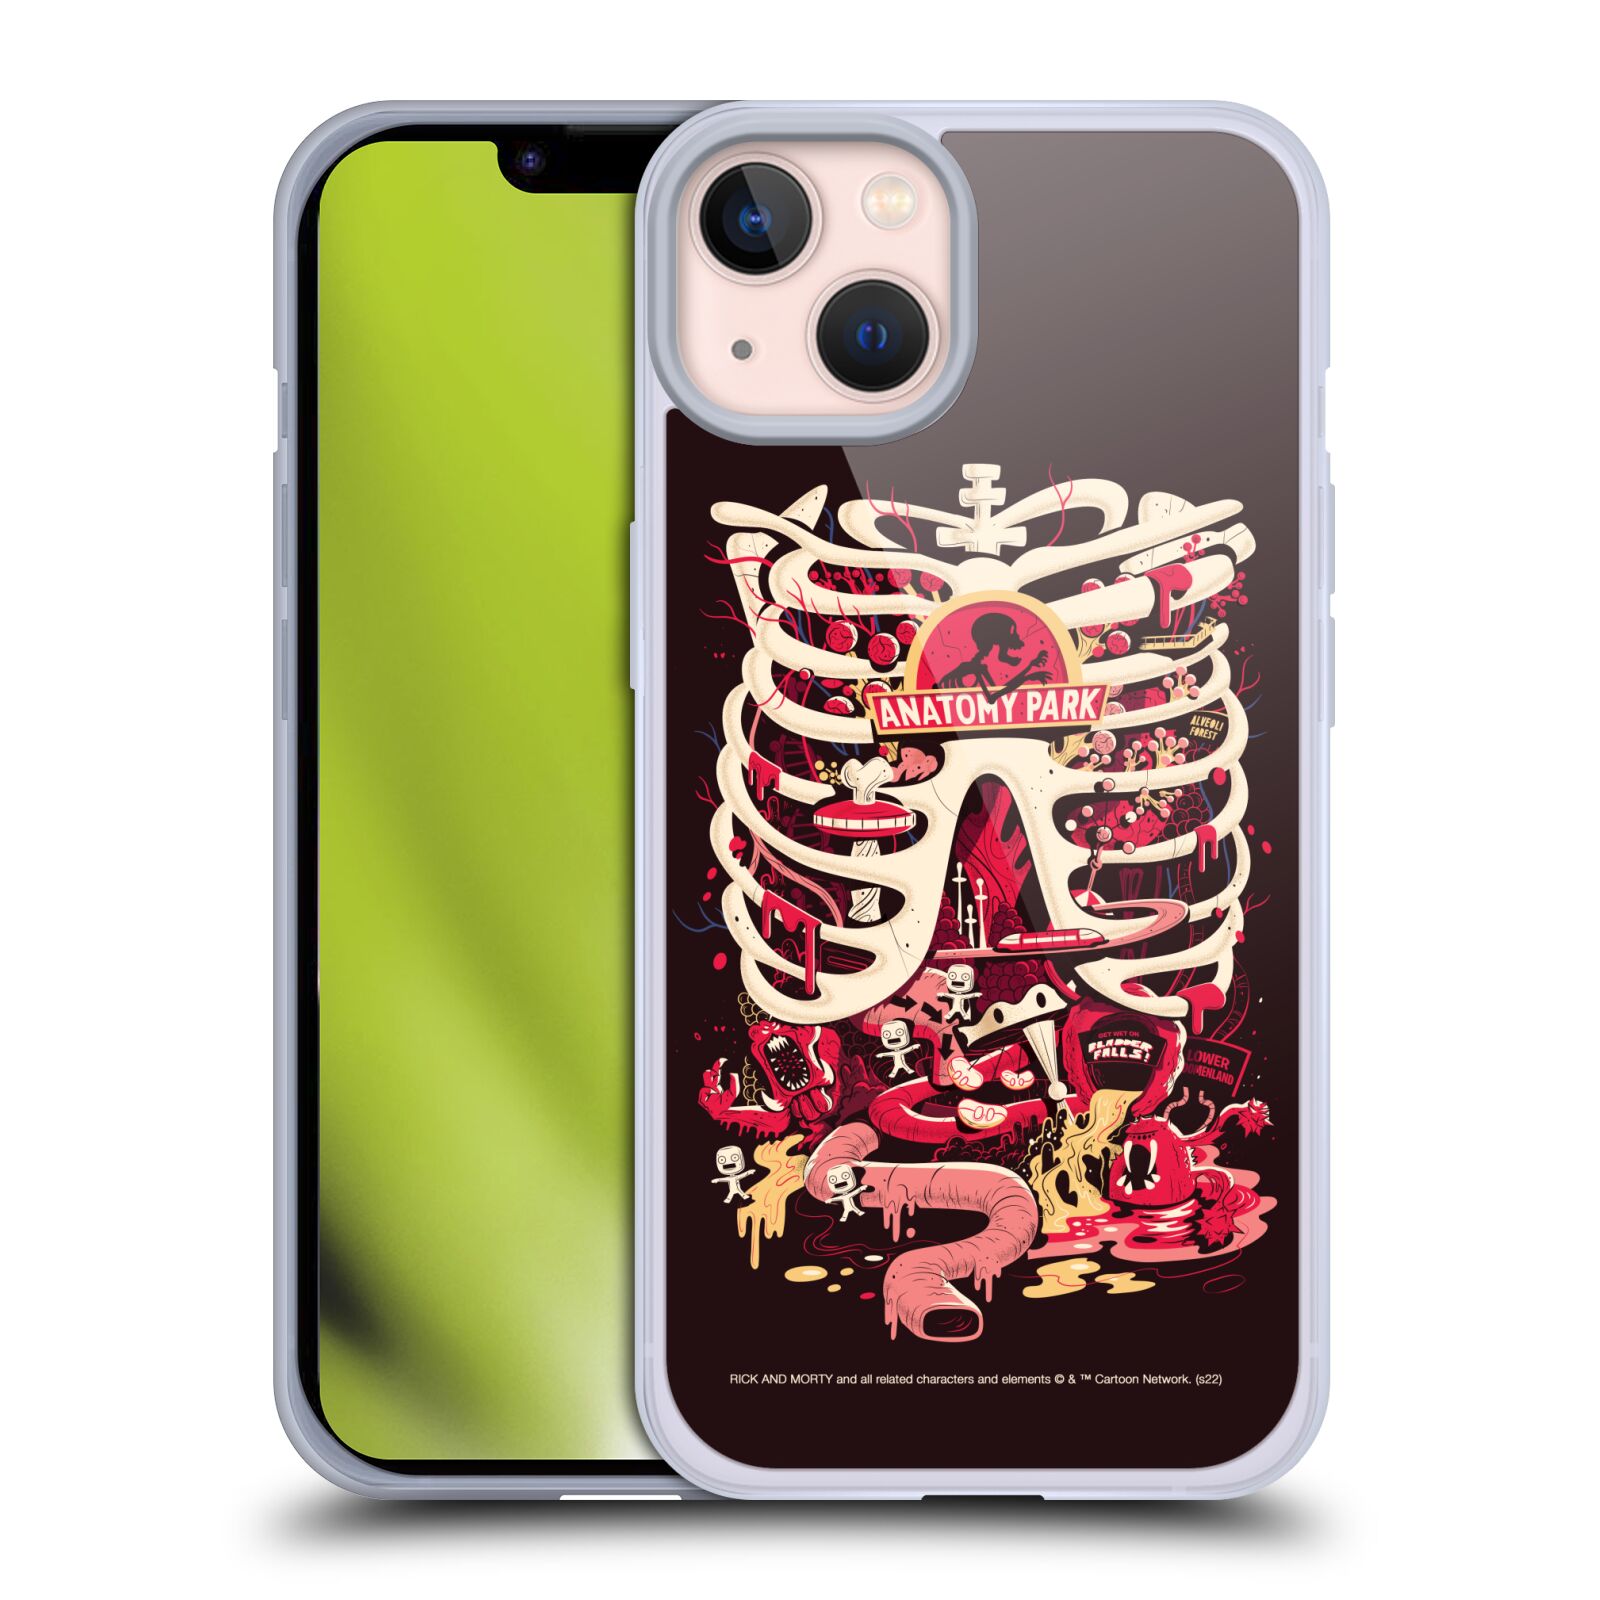 Silikonové pouzdro na mobil Apple iPhone 13 - Rick And Morty - Anatomy Park (Silikonový kryt, obal, pouzdro na mobilní telefon Apple iPhone 13 s licencovaným motivem Rick And Morty - Anatomy Park)